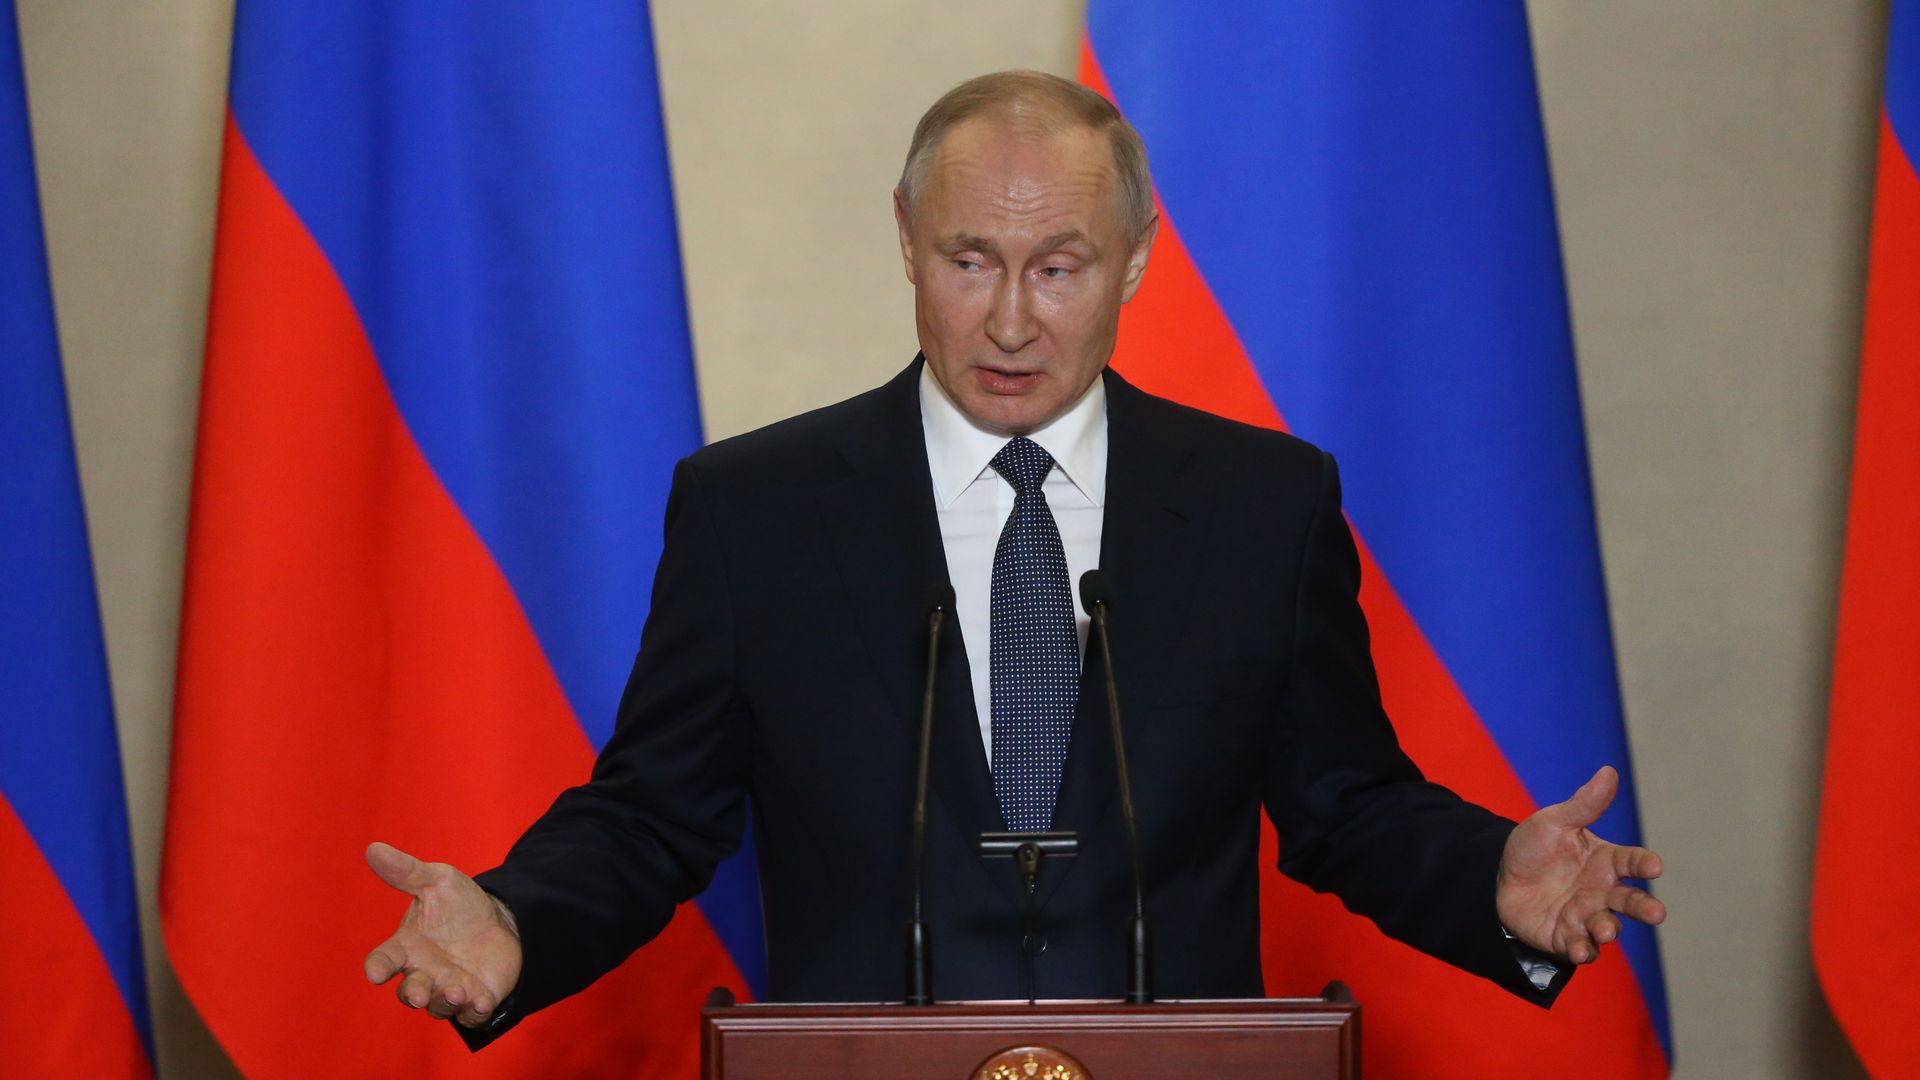 Putin gives a speech in Crimea